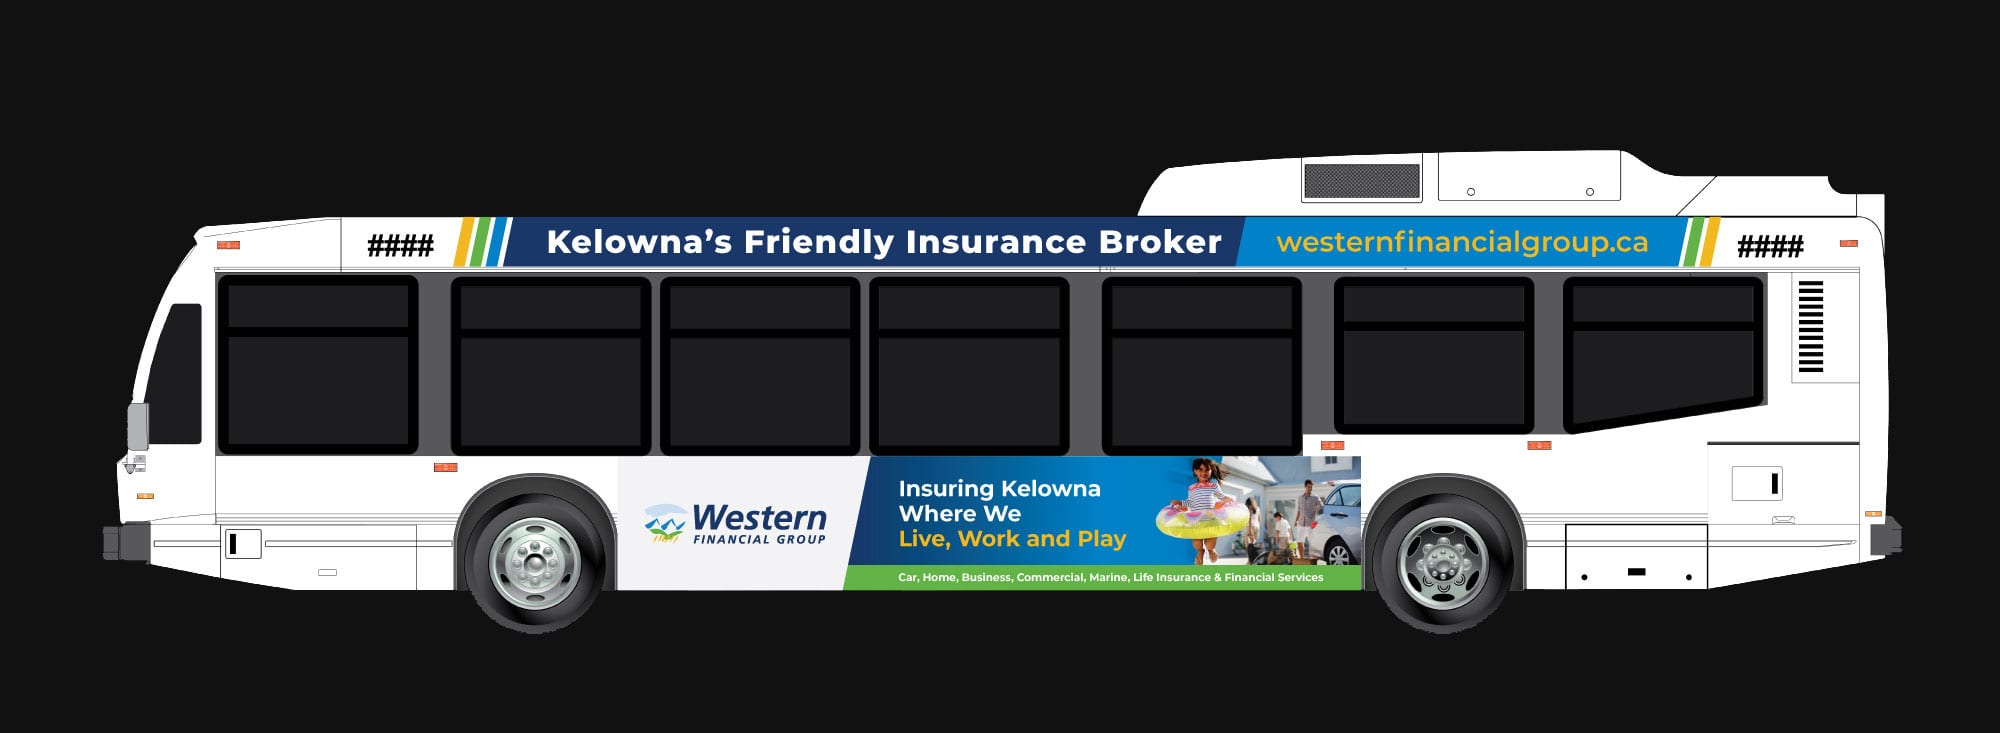 Western Financial bus advertisement design